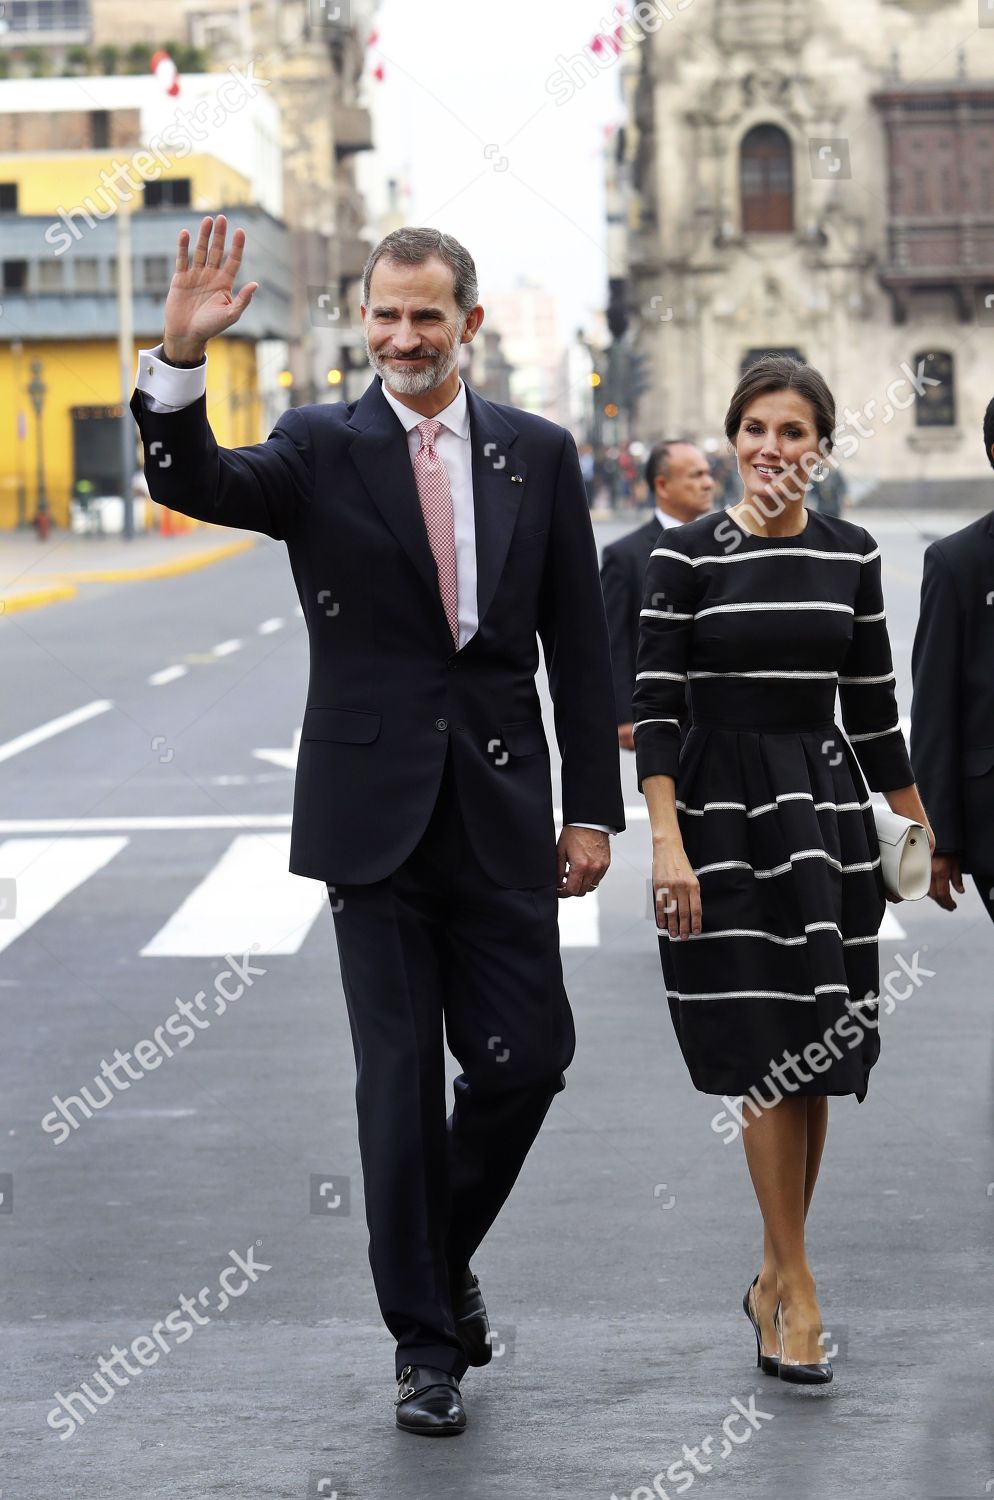 spanish-royals-visit-to-lima-peru-shutterstock-editorial-9977226p.jpg